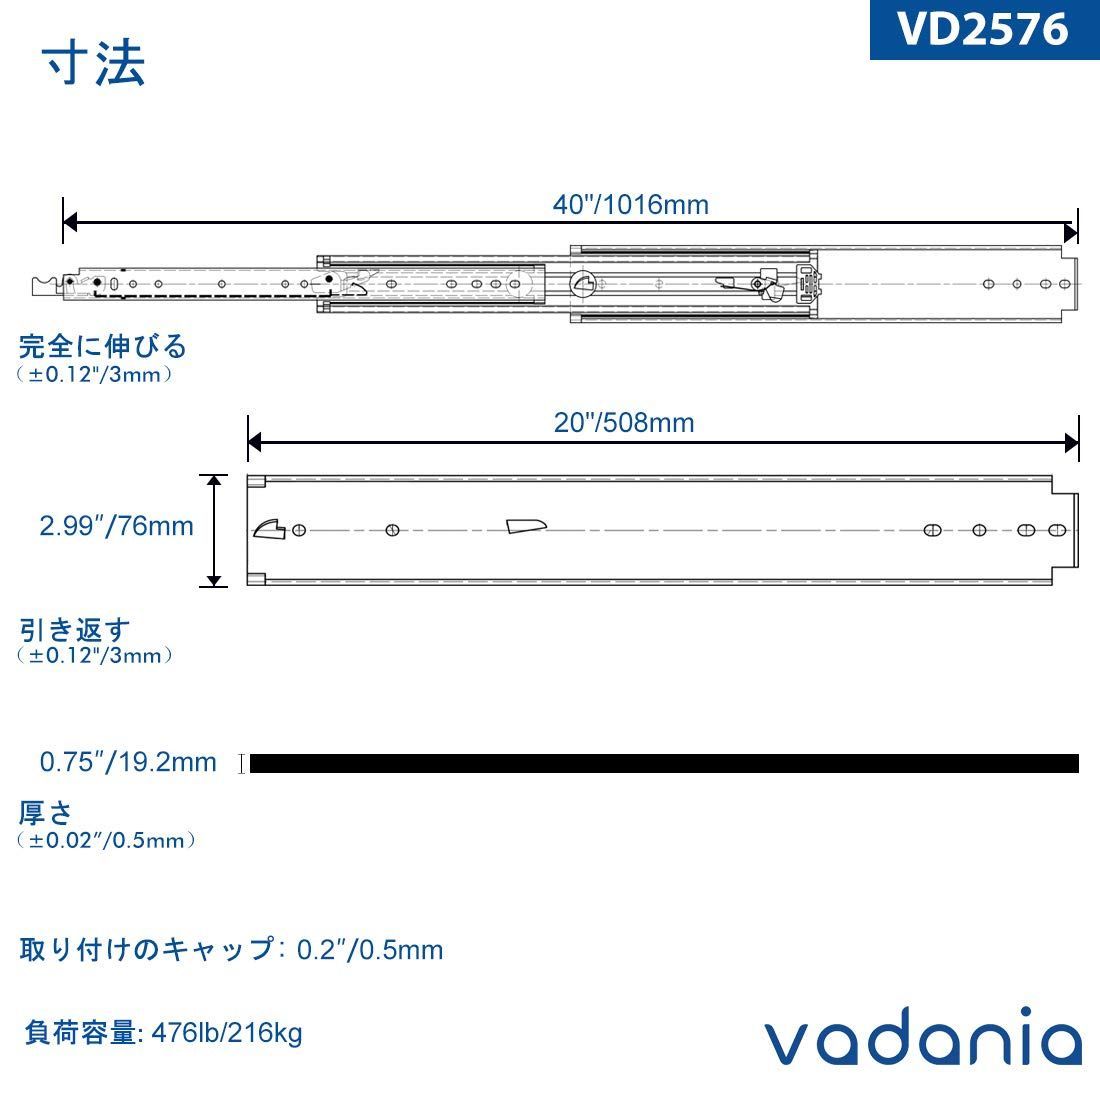 VADANIA ロック付き 超重量用スライドレール 1100mm Heavy Duty引き出しスライド VD2576 工業用レール 左右1セット - 4